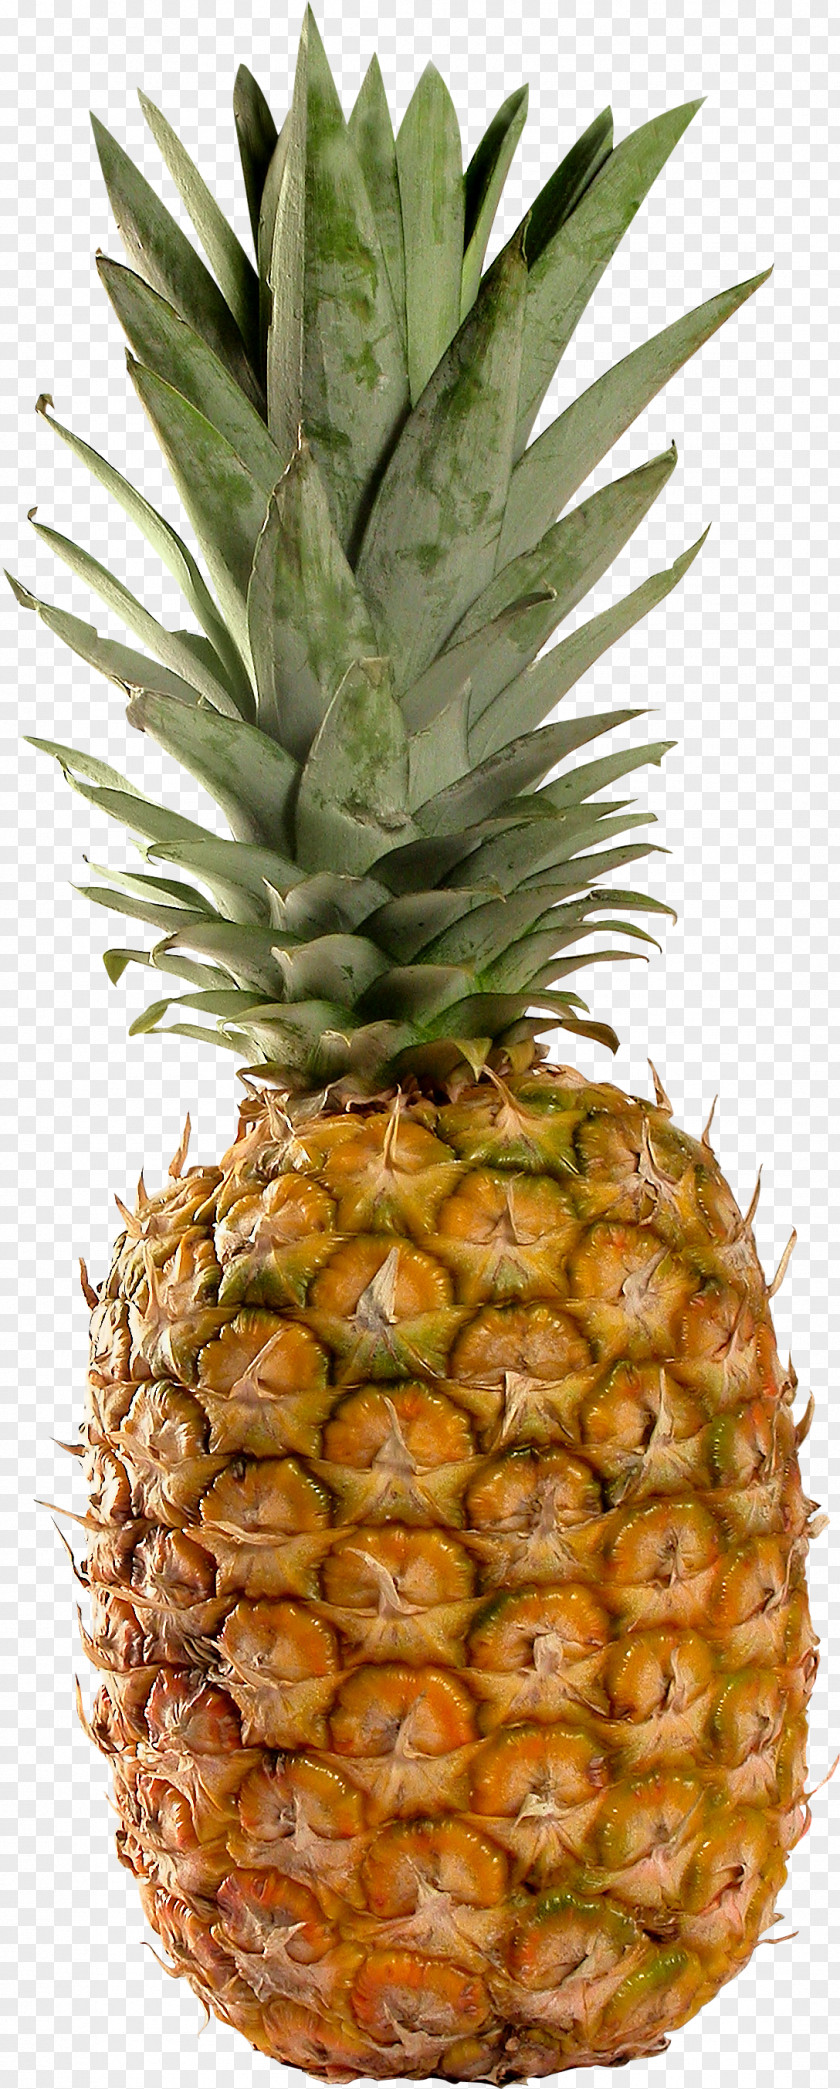 Pineapple Image, Free Download Juice Fruit PNG